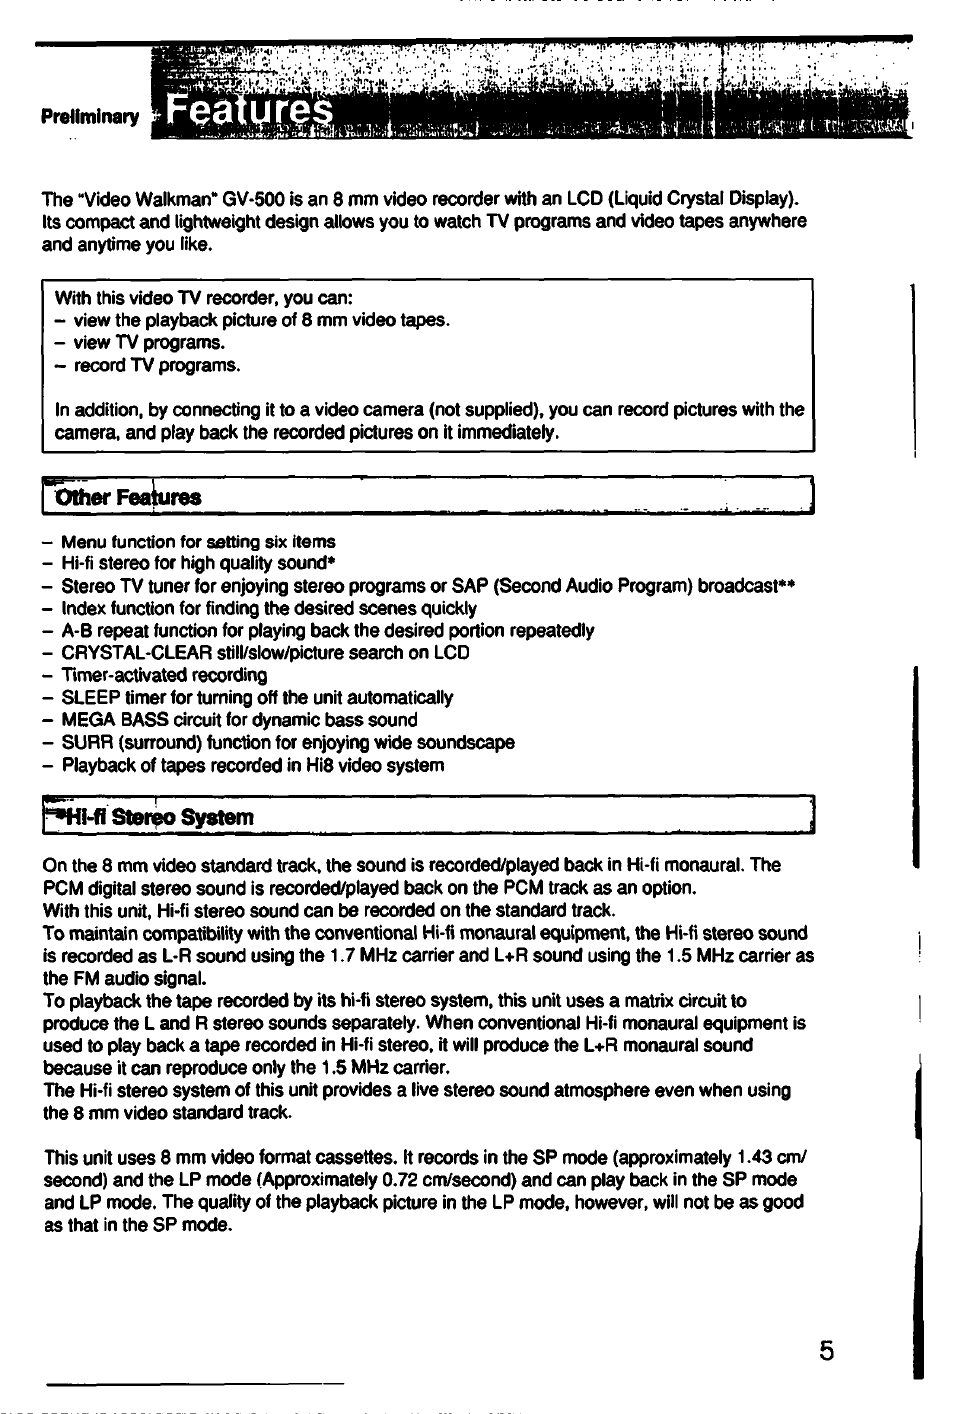 Preliminary, Fim-fi stetig systeiit | Sony GV-500 User Manual | Page 5 / 84